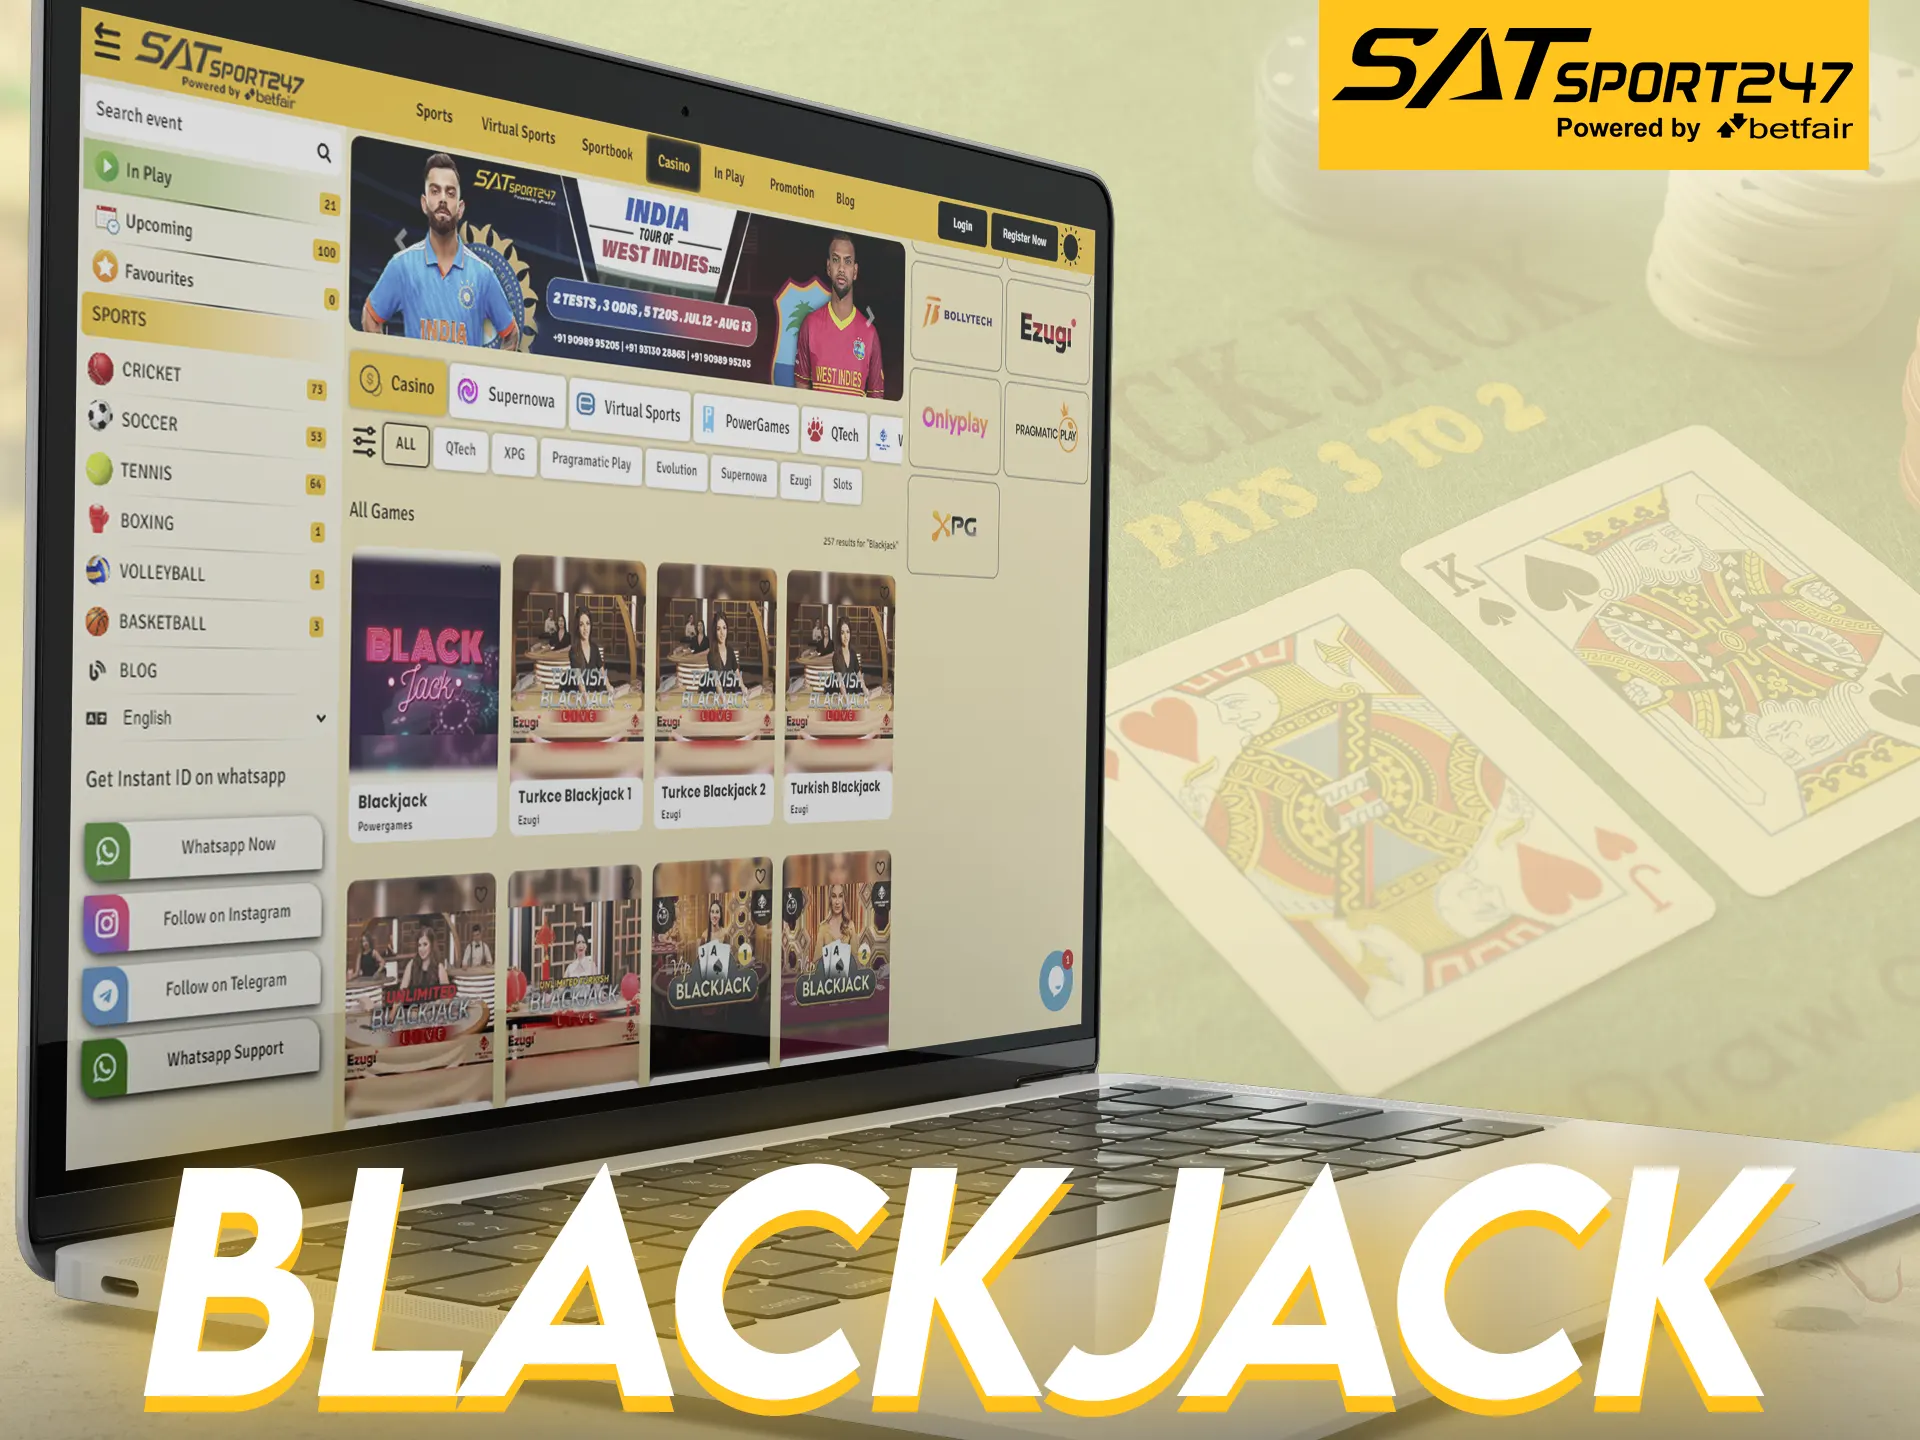 If you like blackjack, play at Satsport247.